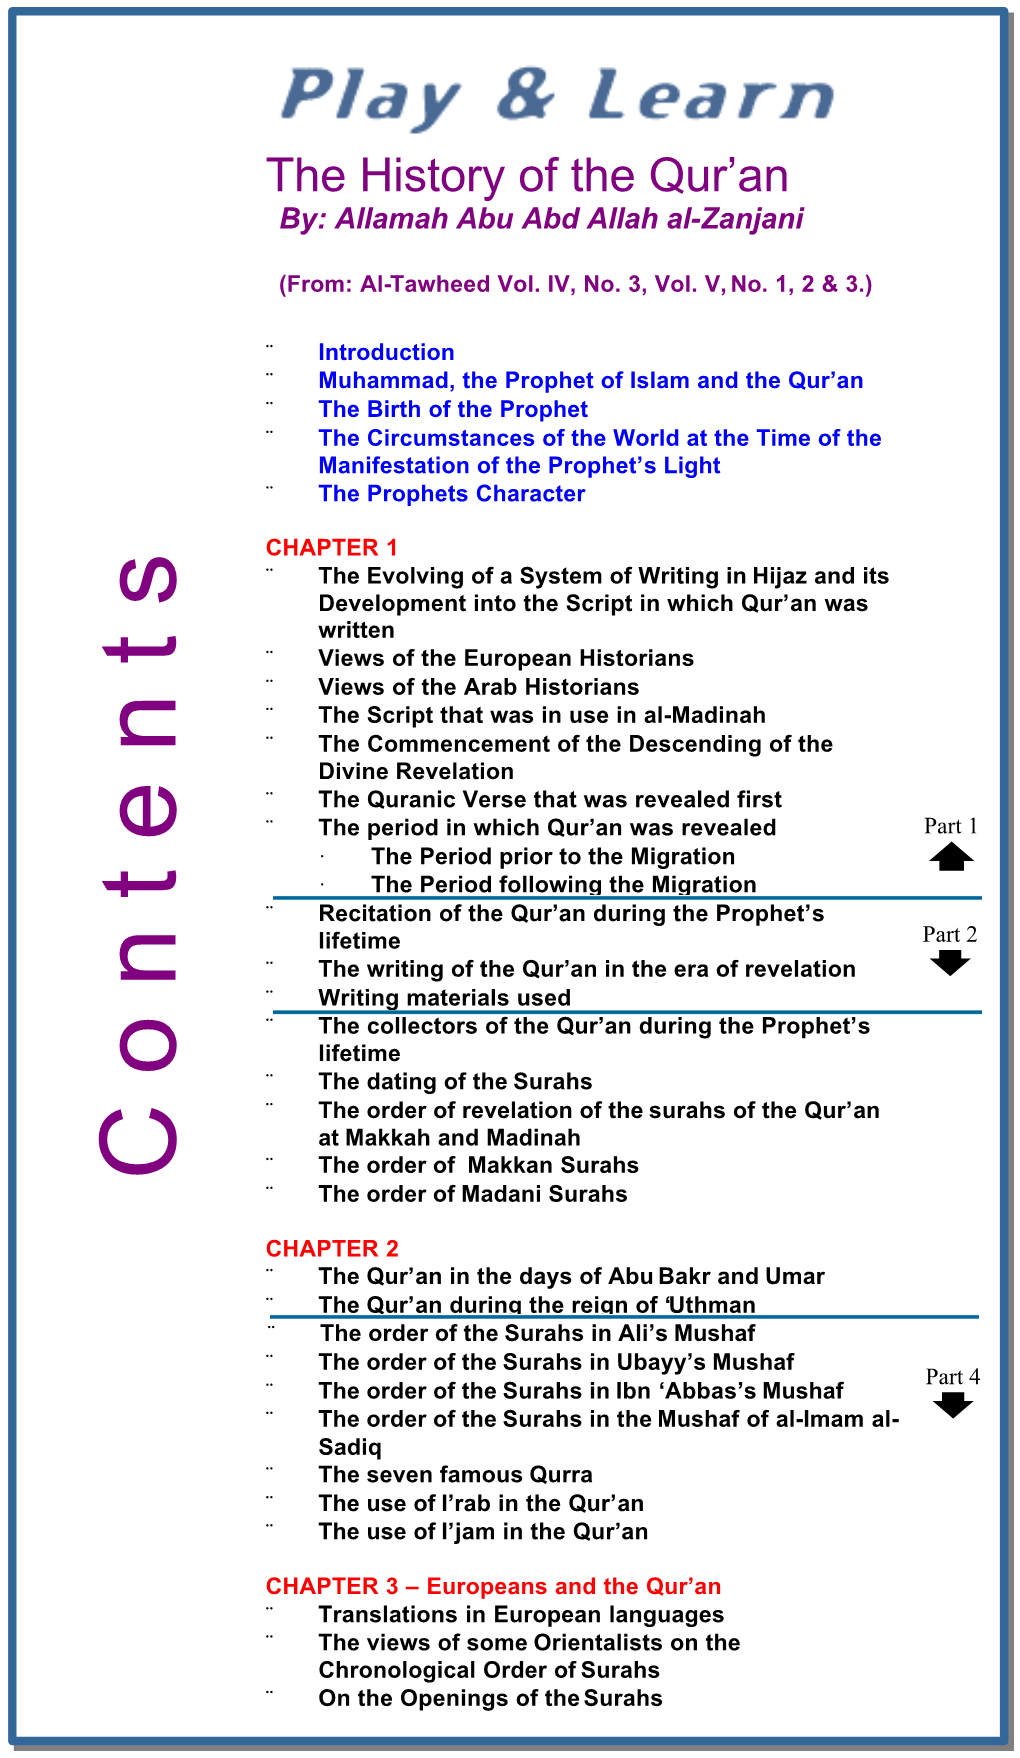 The History of the Qur'an Part 3 by 'Allamah Abu 'Abd Allah Al